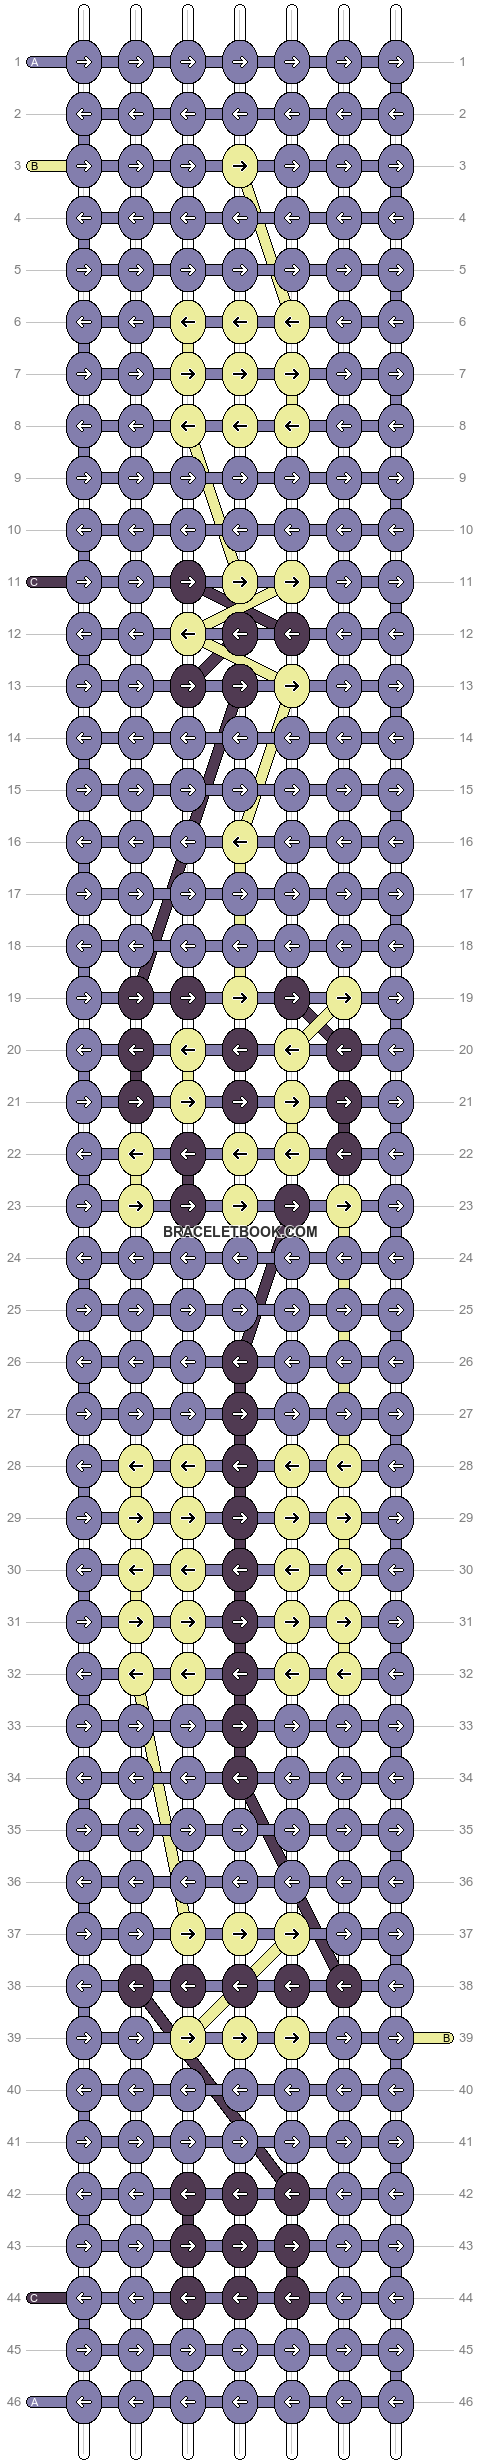 Alpha pattern #66741 variation #123848 pattern